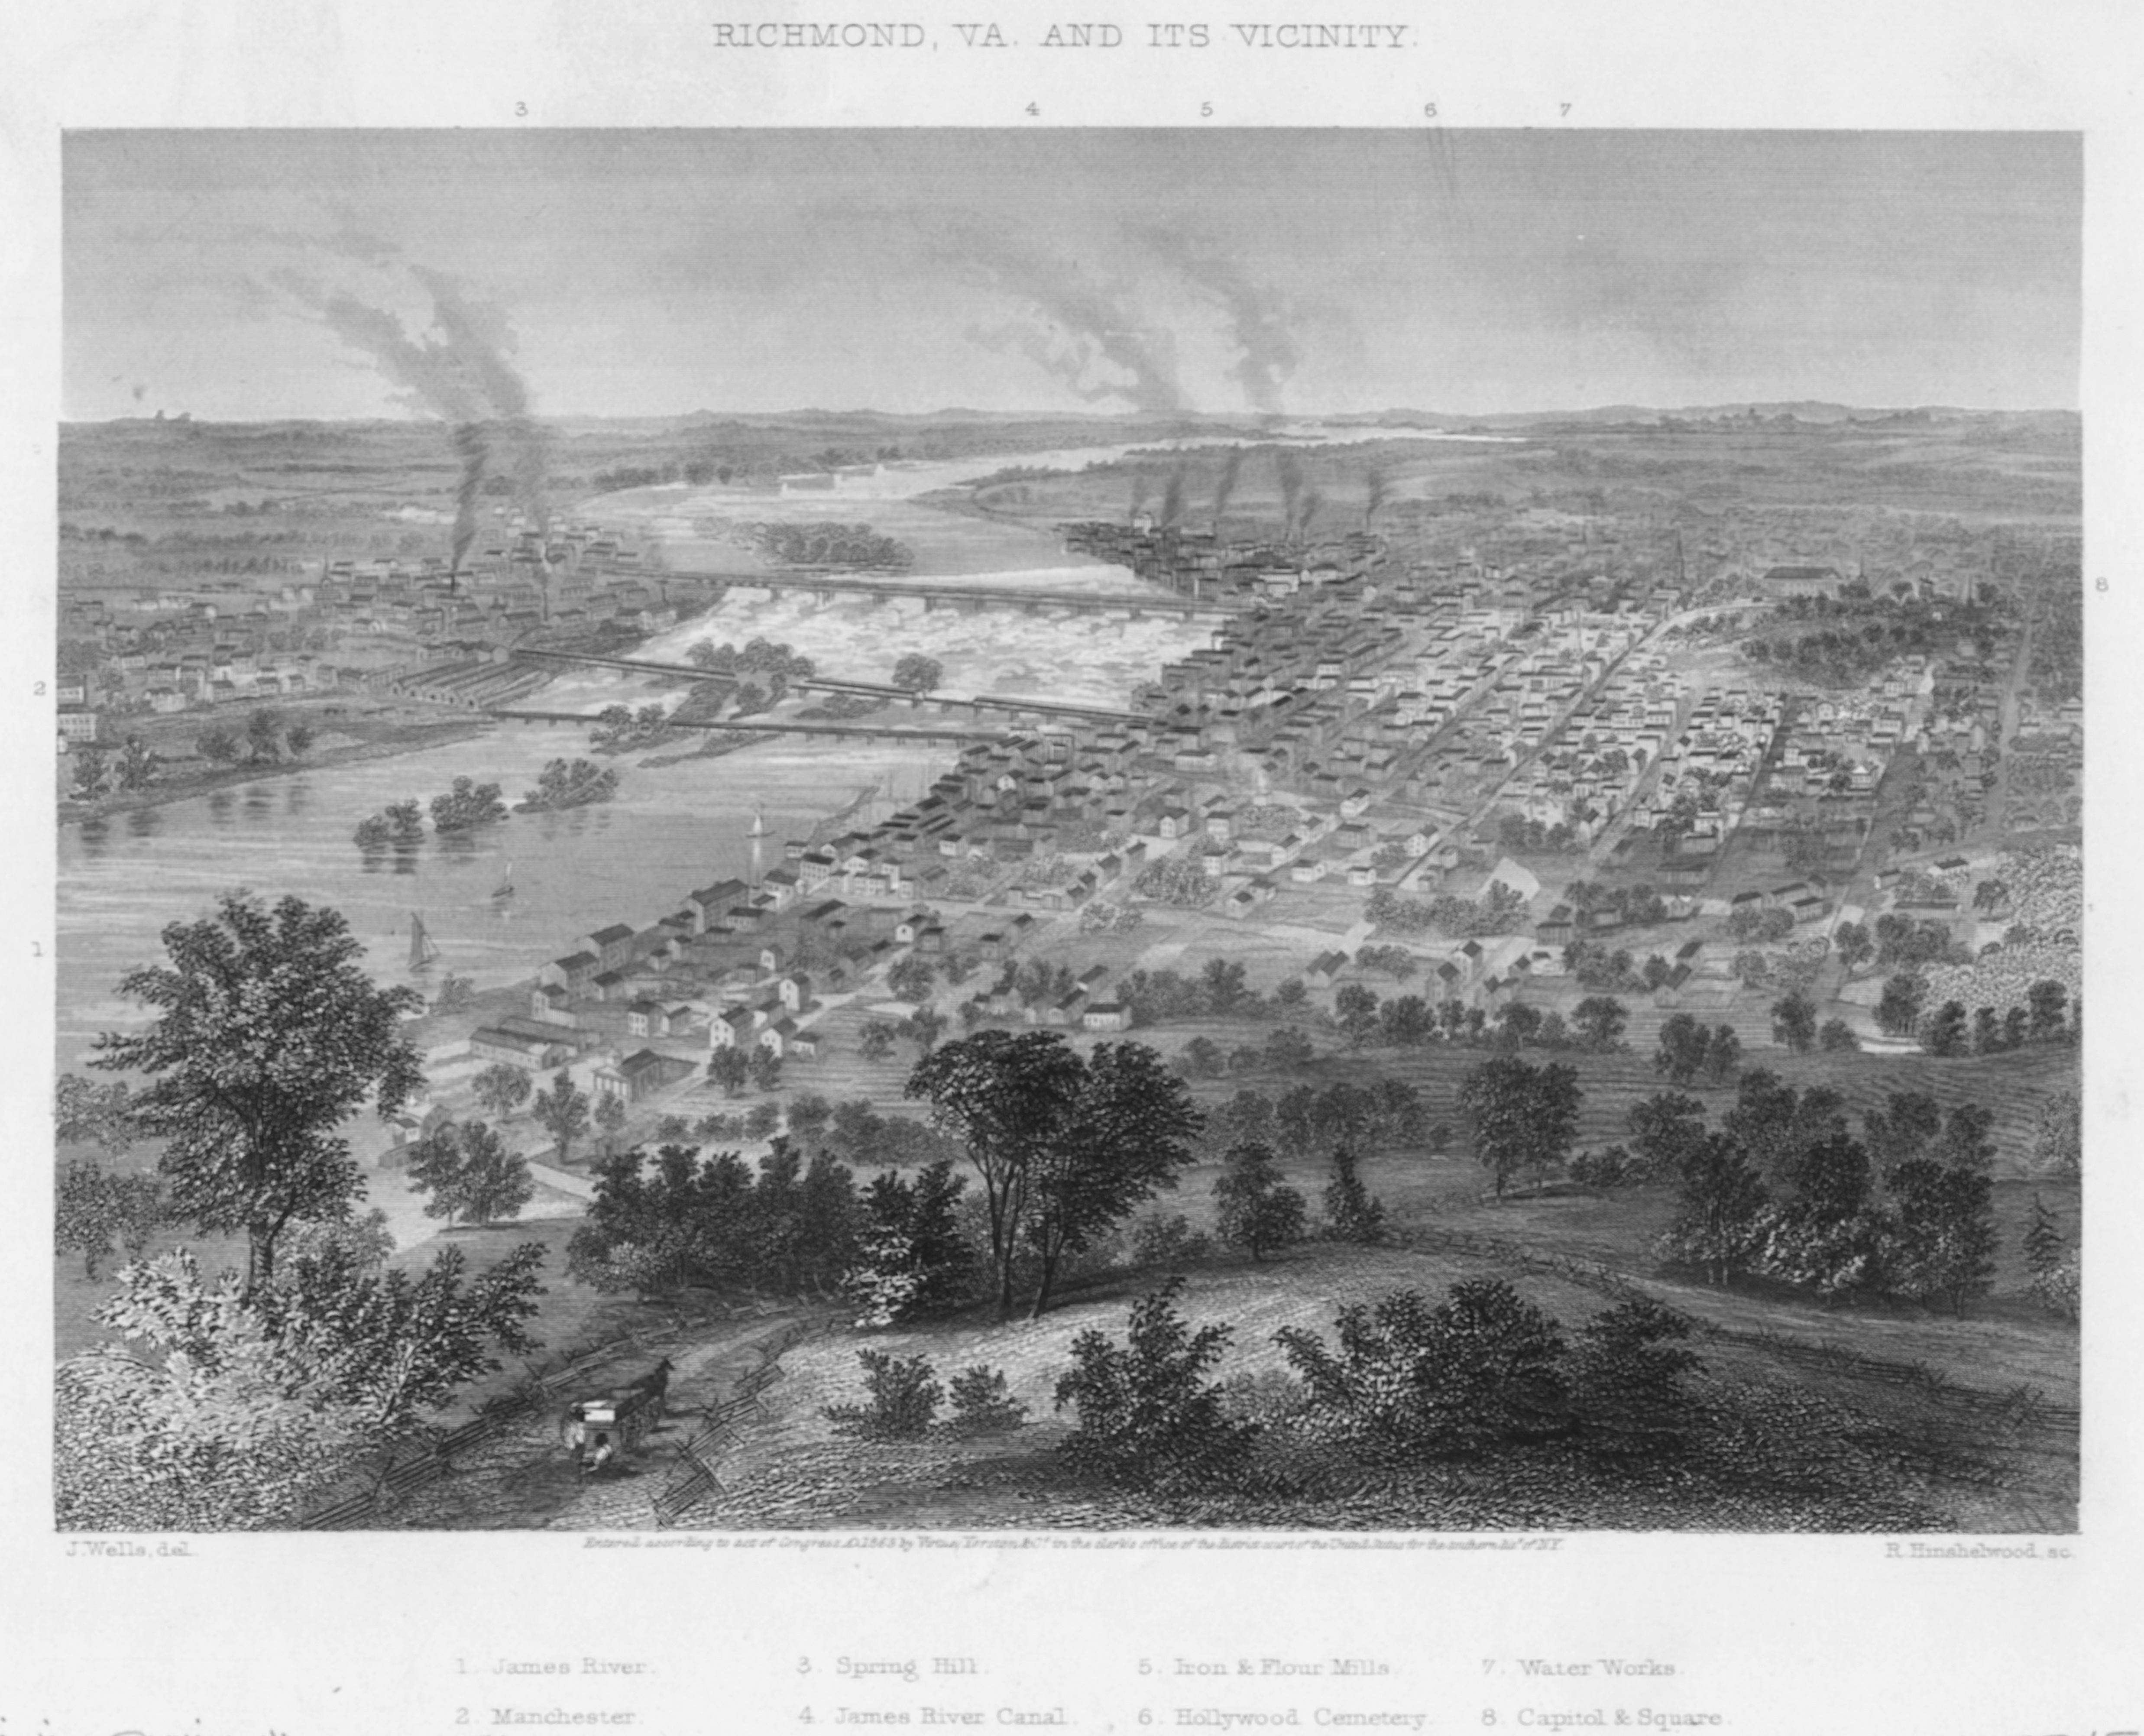 View Of Richmond, Virginia